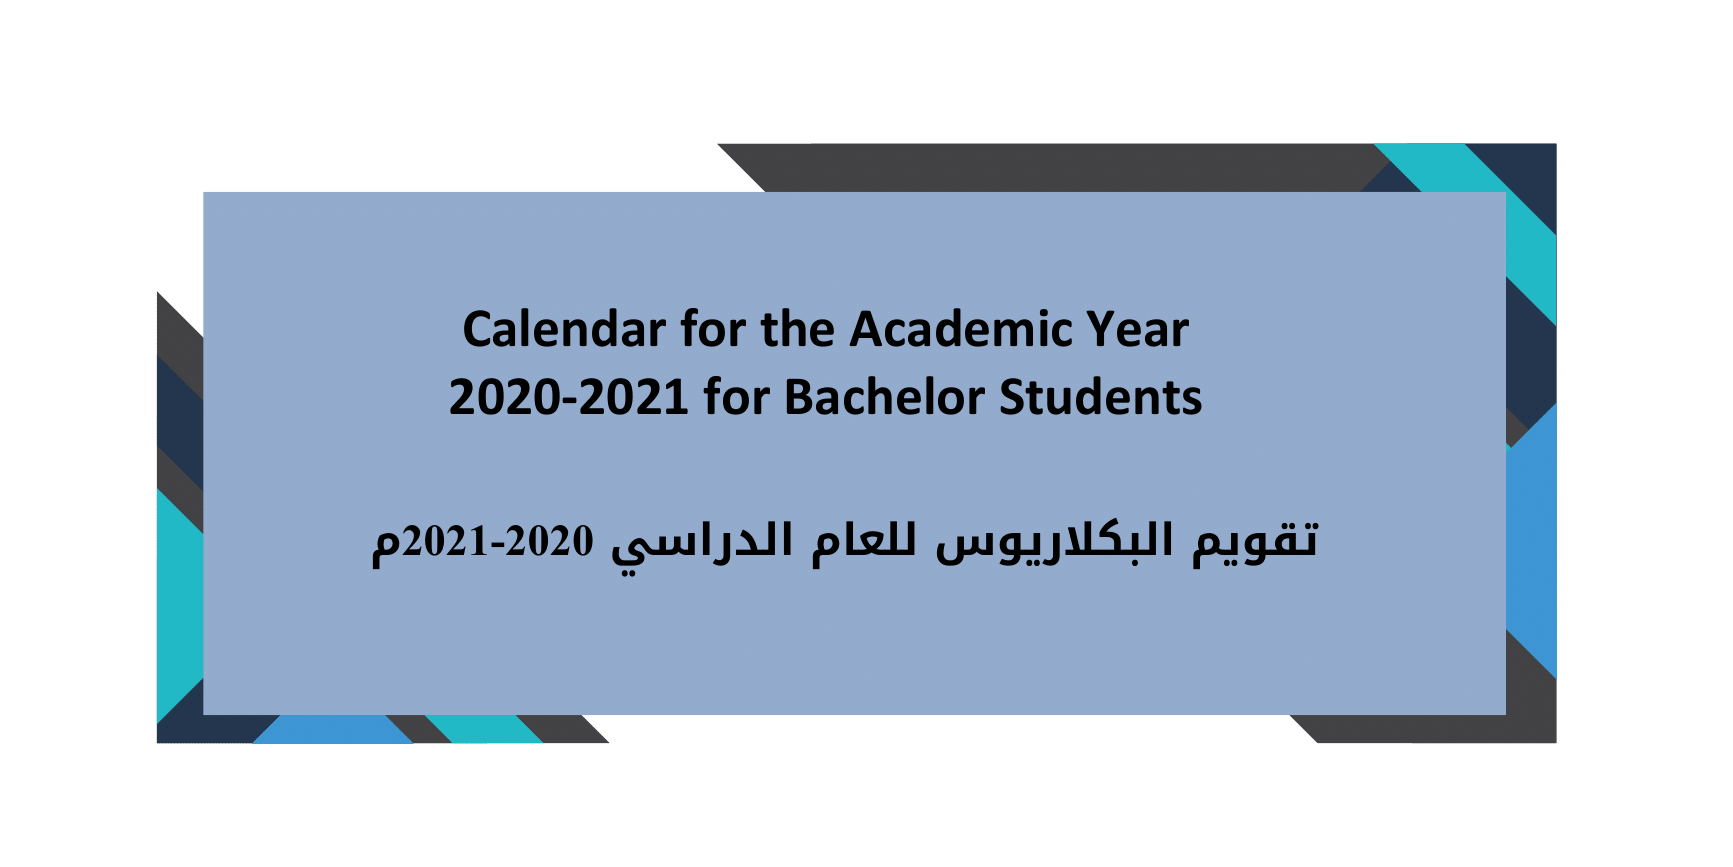 Bachelor Students: Academic Calendar for the Academic Year ...